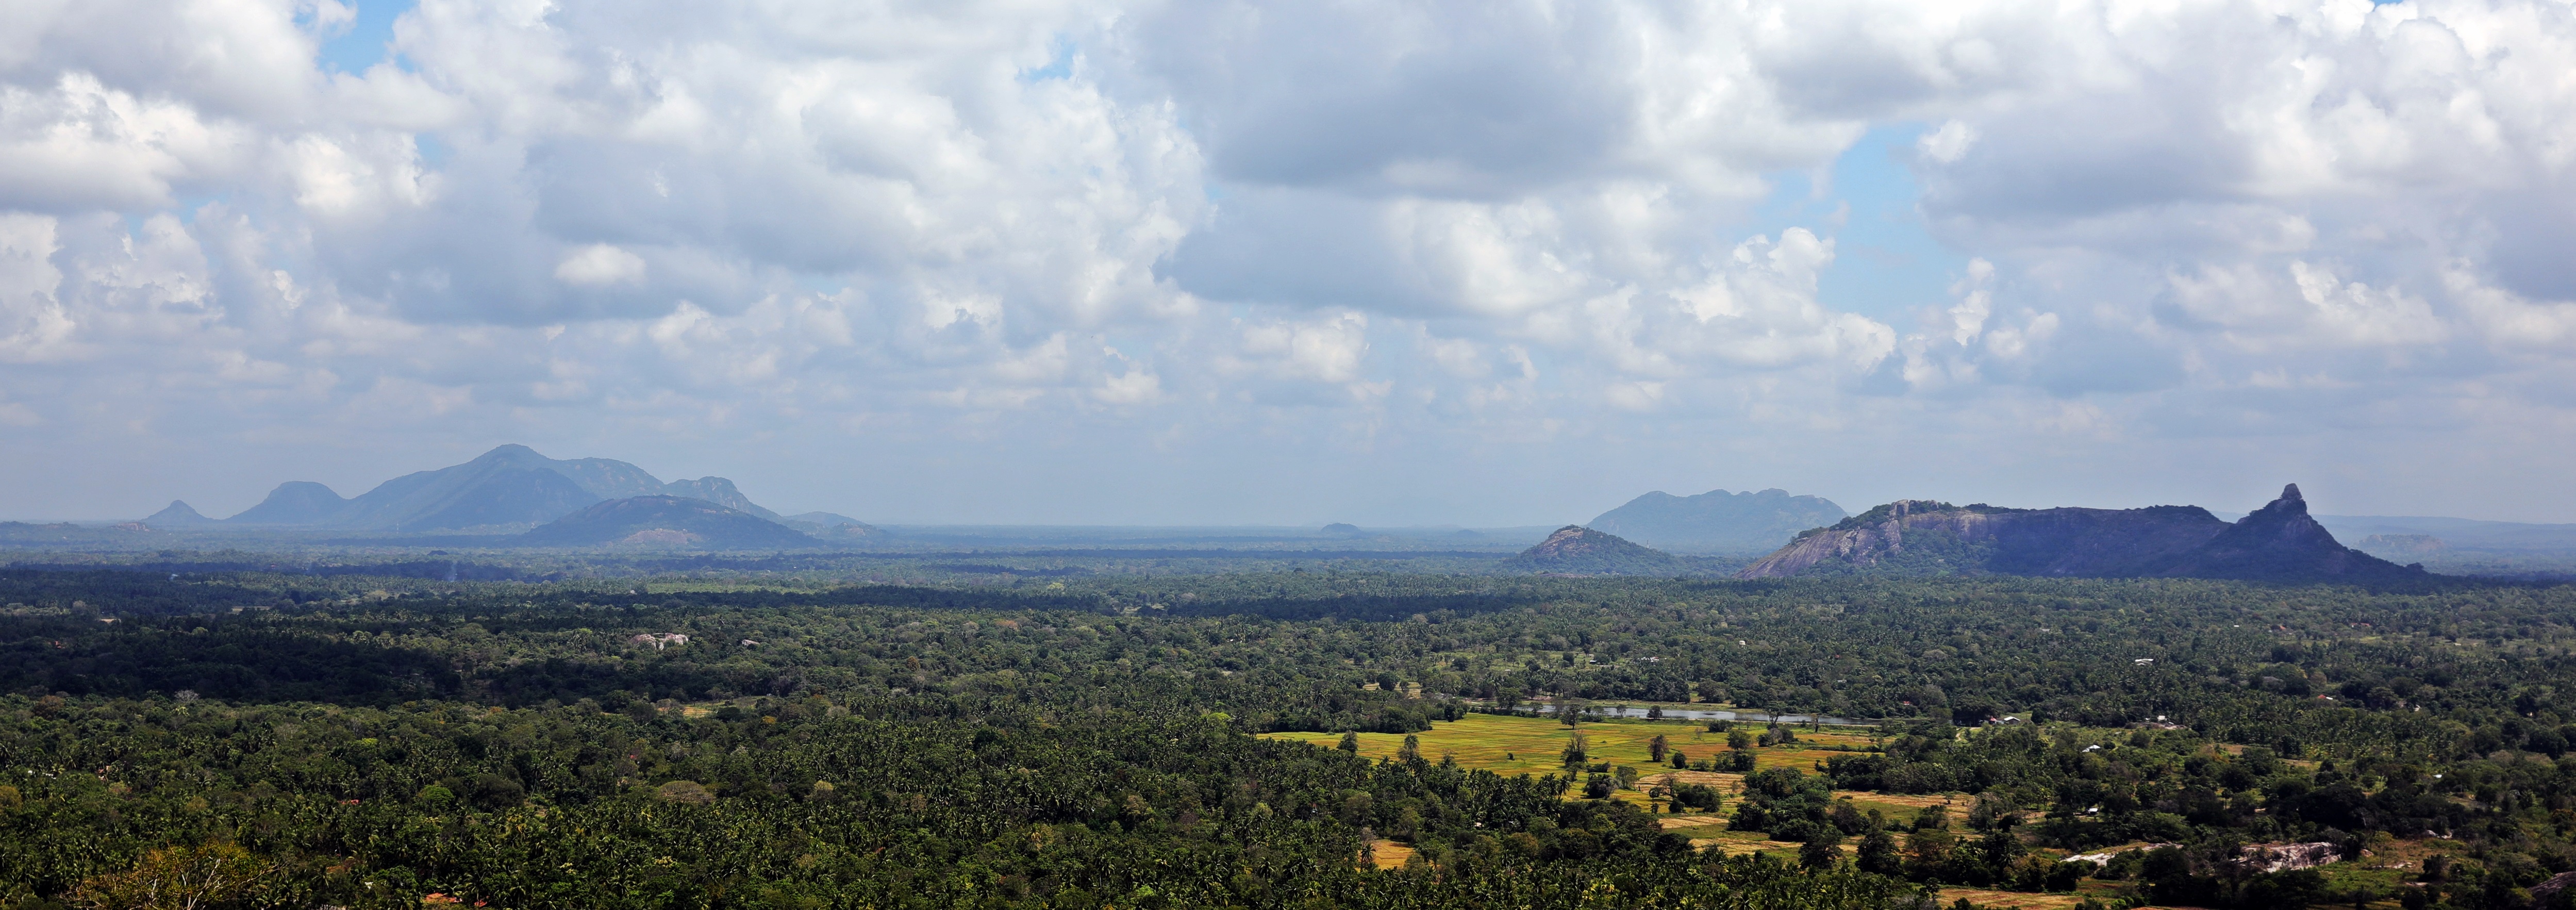 View from Yapahuwa